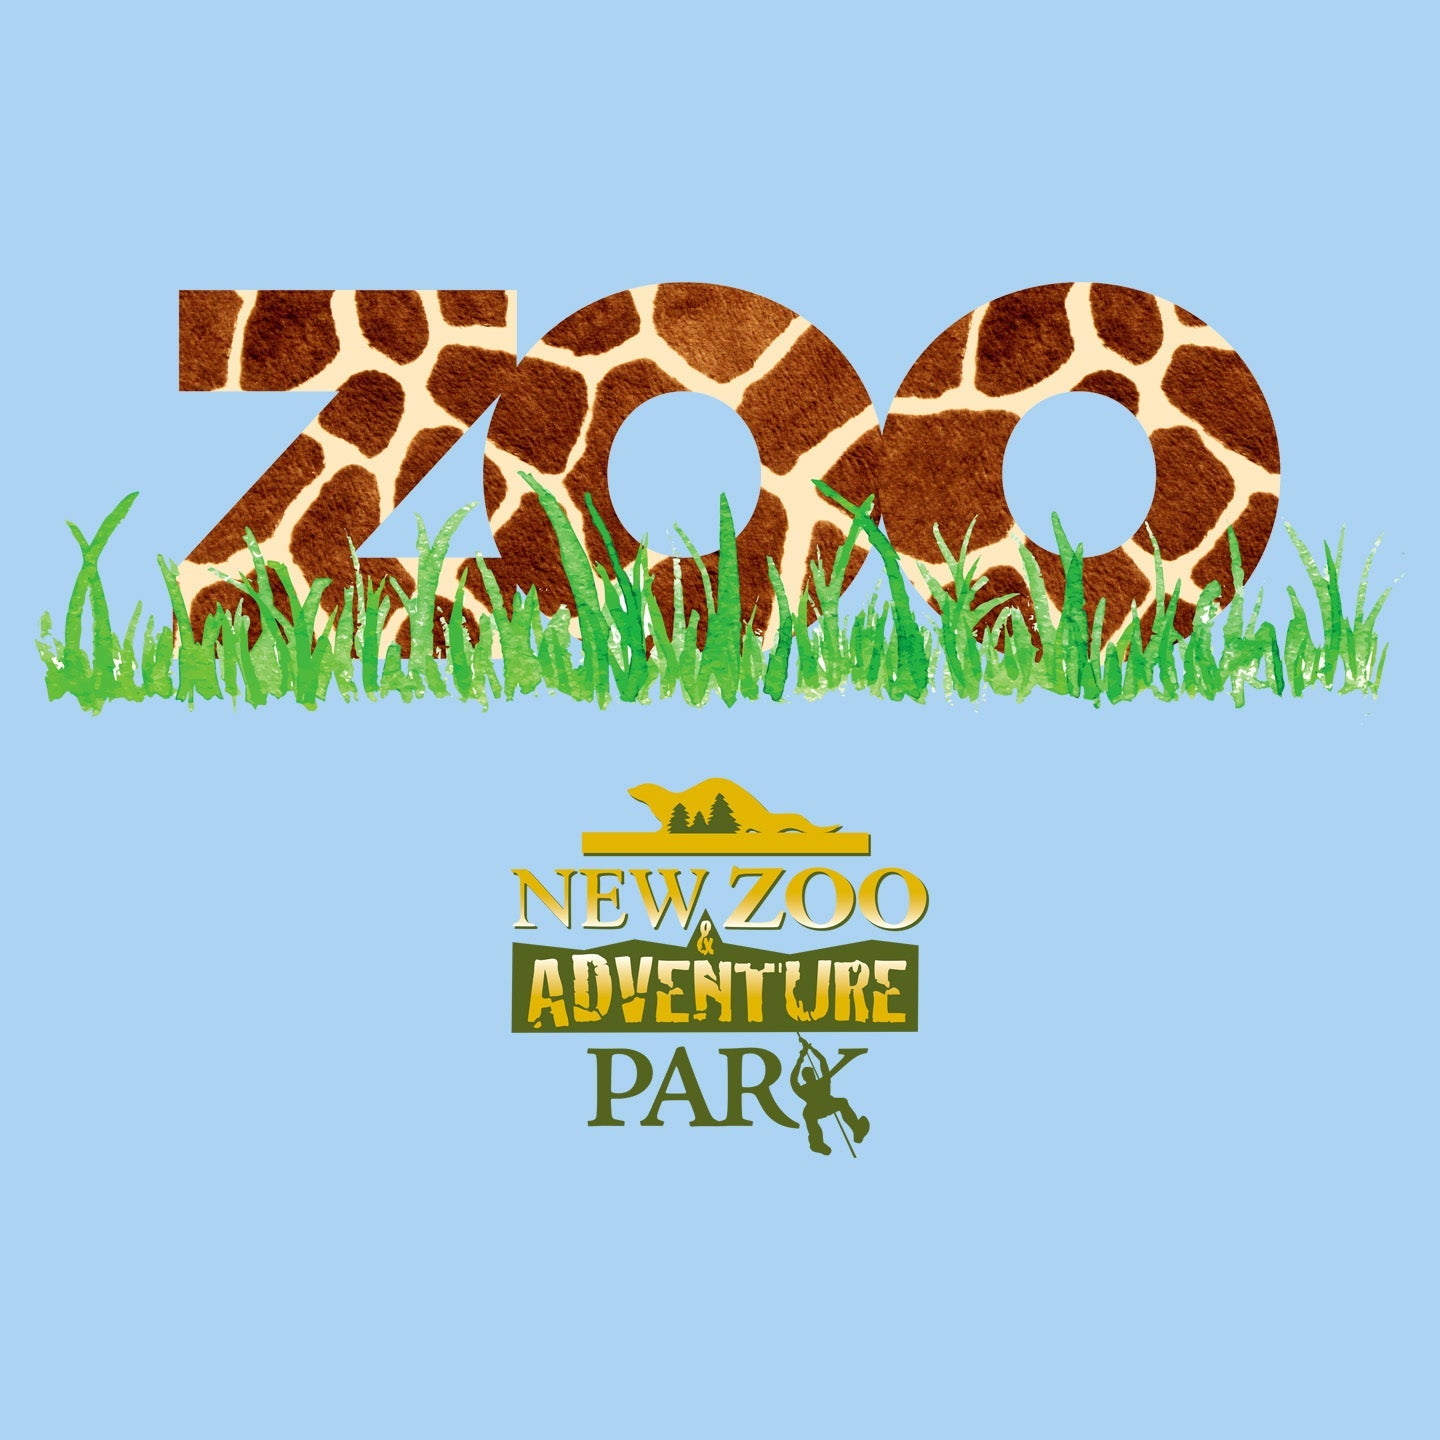 NEW Zoo Giraffe Pattern - Adult Unisex T-Shirt